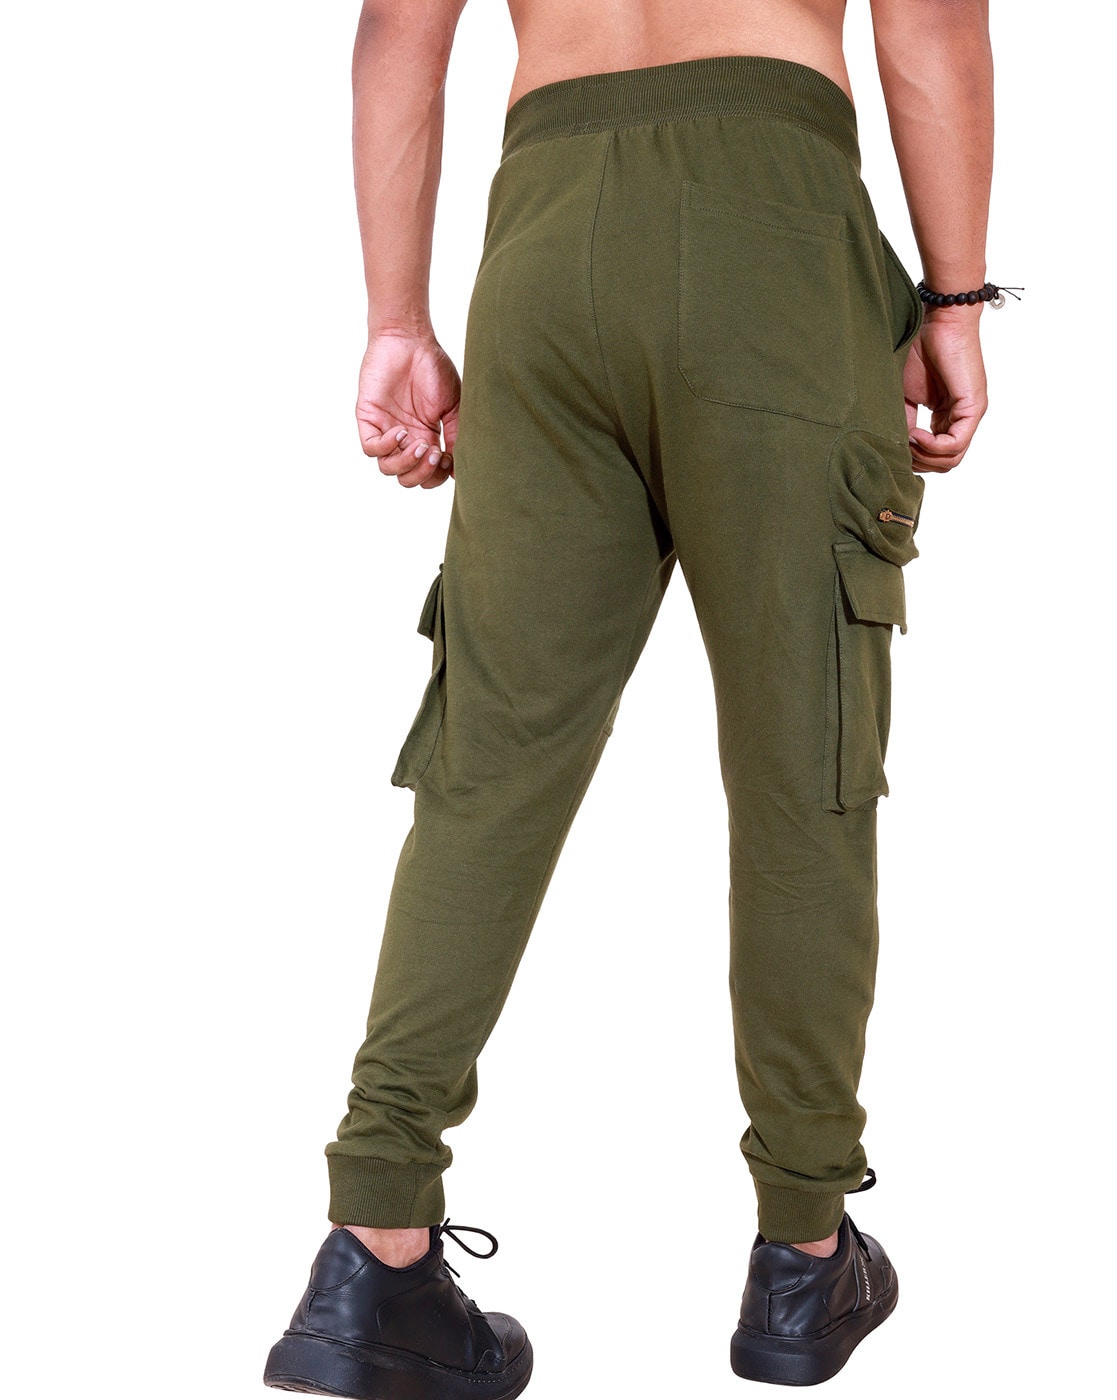 Buy Olive green Track Pants for Men by ZOLDEM Online